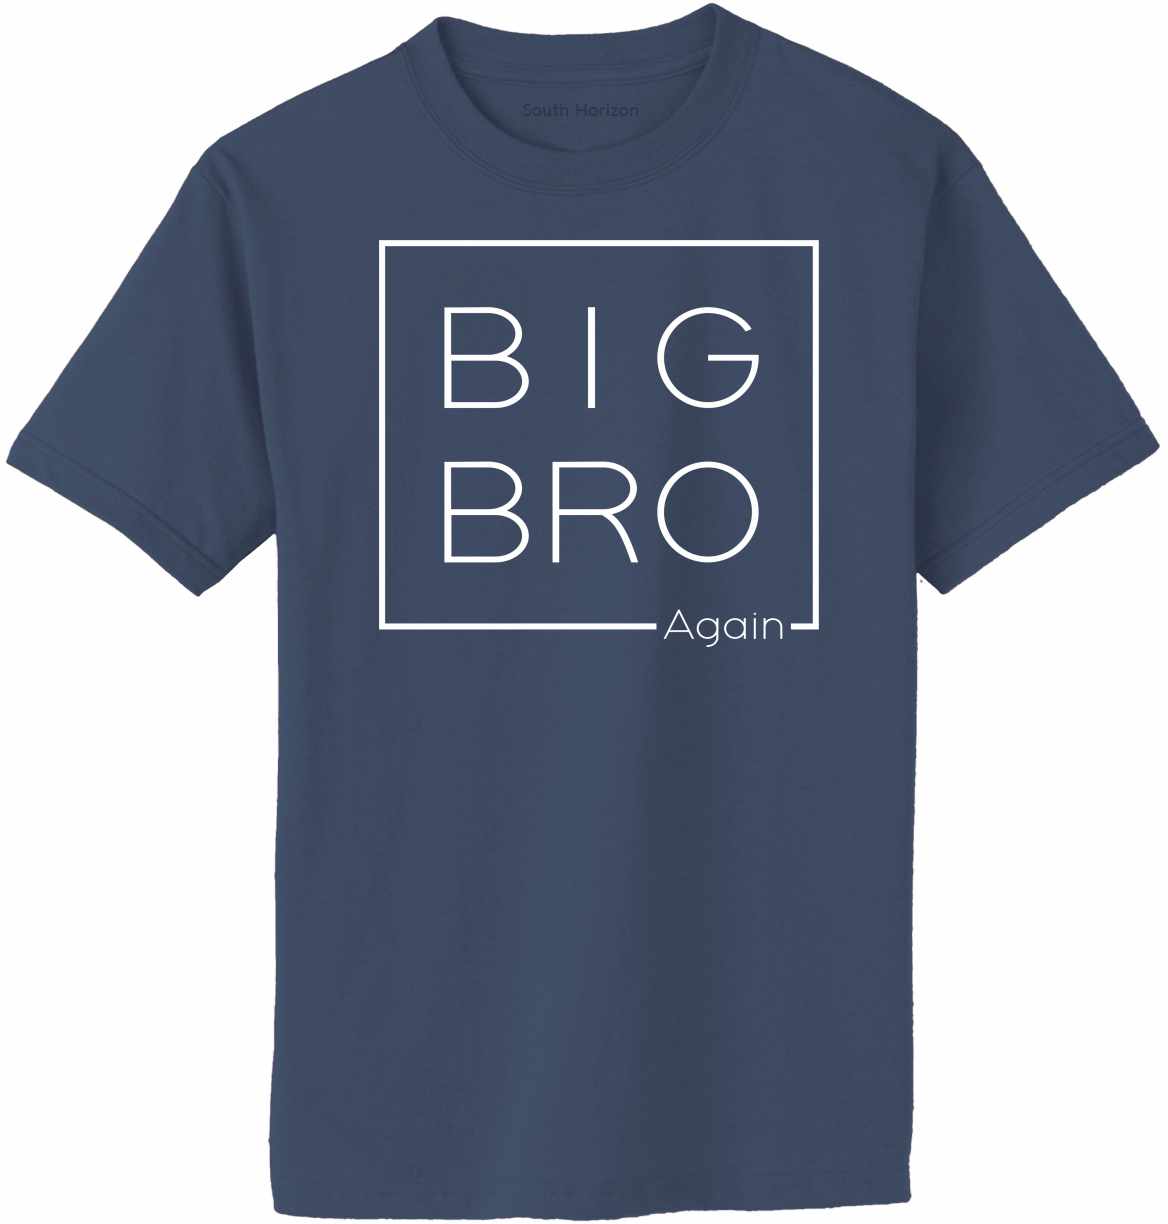 Big Bro Again- Big Brother Box on Adult T-Shirt (#1311-1)